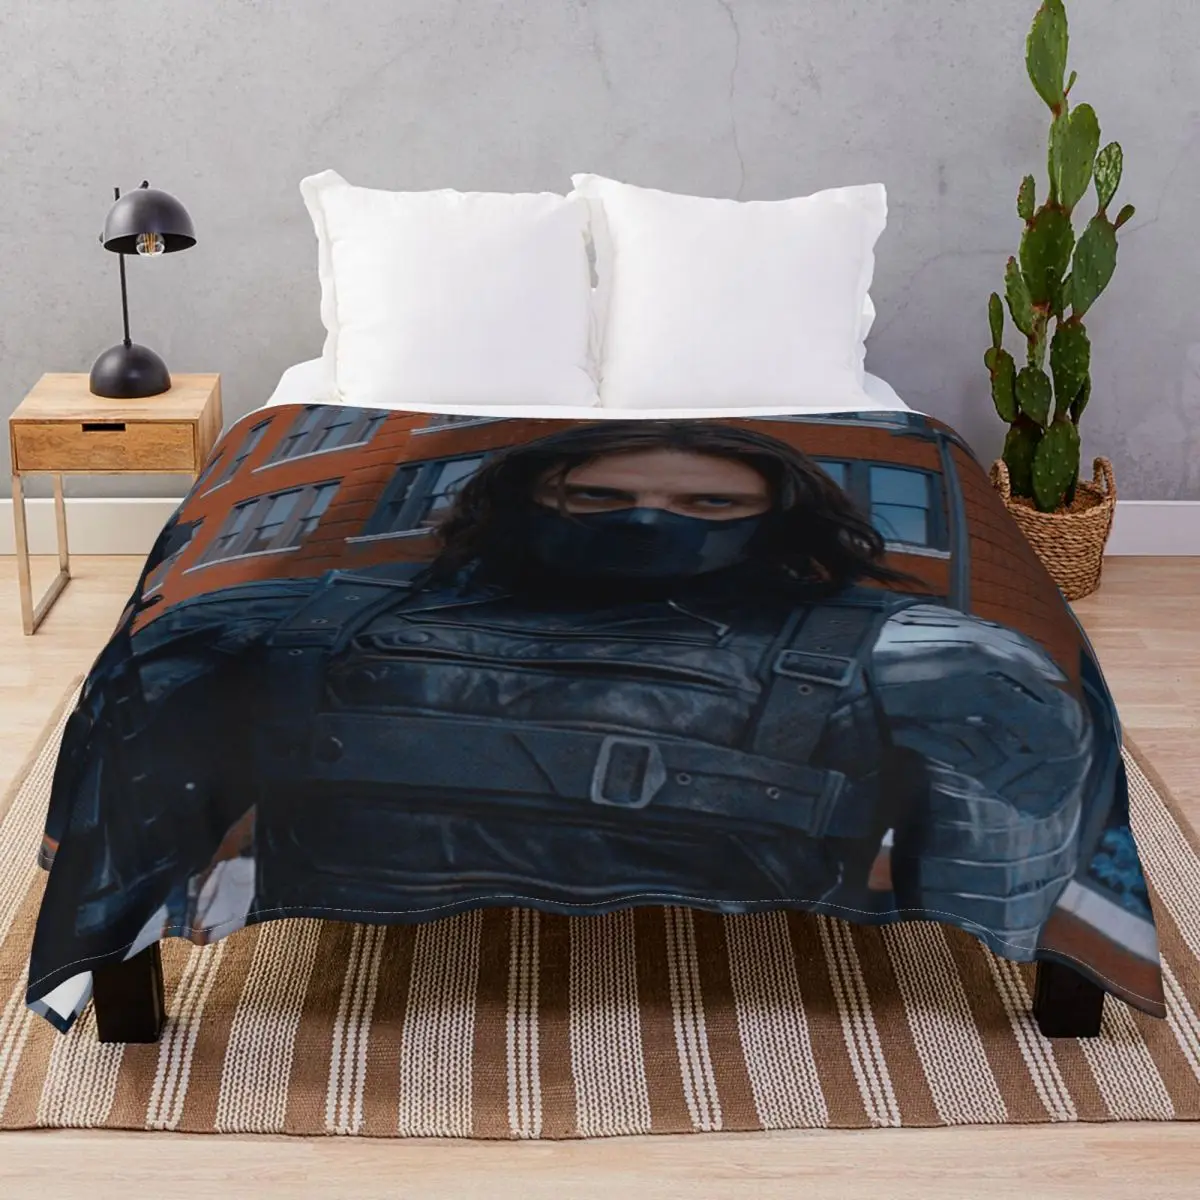 Hot Winter Soldier Blanket Velvet Printed Fluffy Unisex Throw Blankets for Bedding Home Couch Travel Cinema